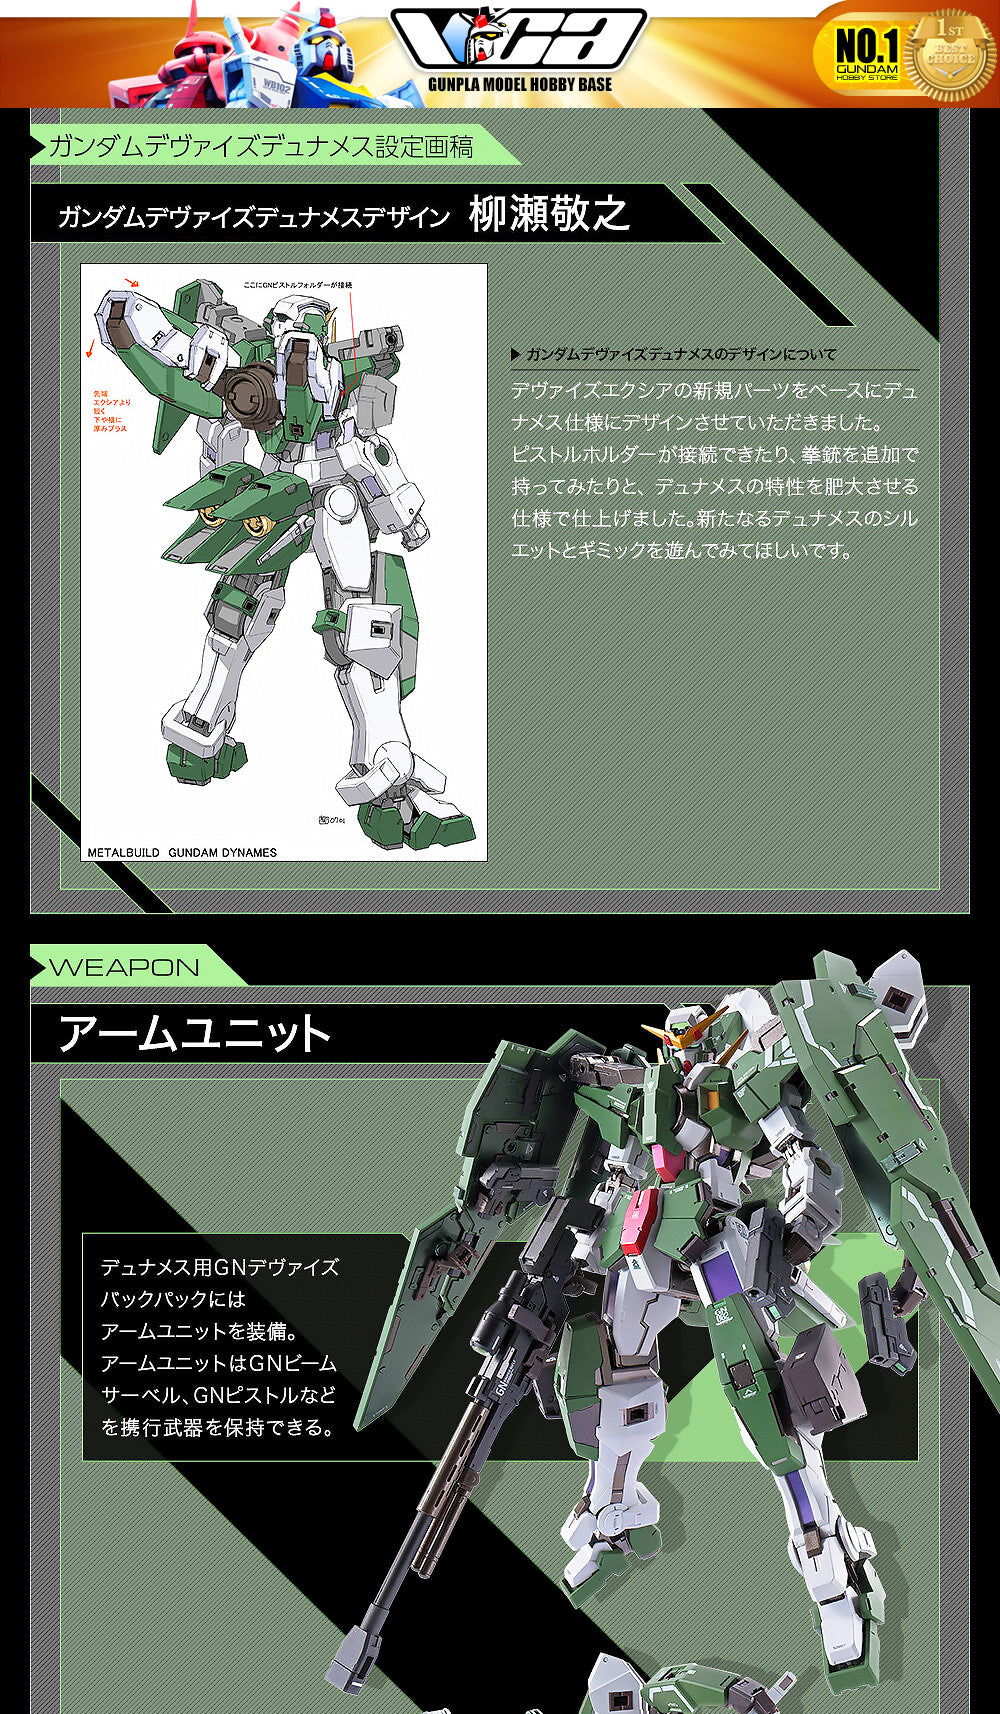 Bandai Metal Build Gundam Dynames & Devise Dynames Structure Action Figure Toy Model VCA Singapore